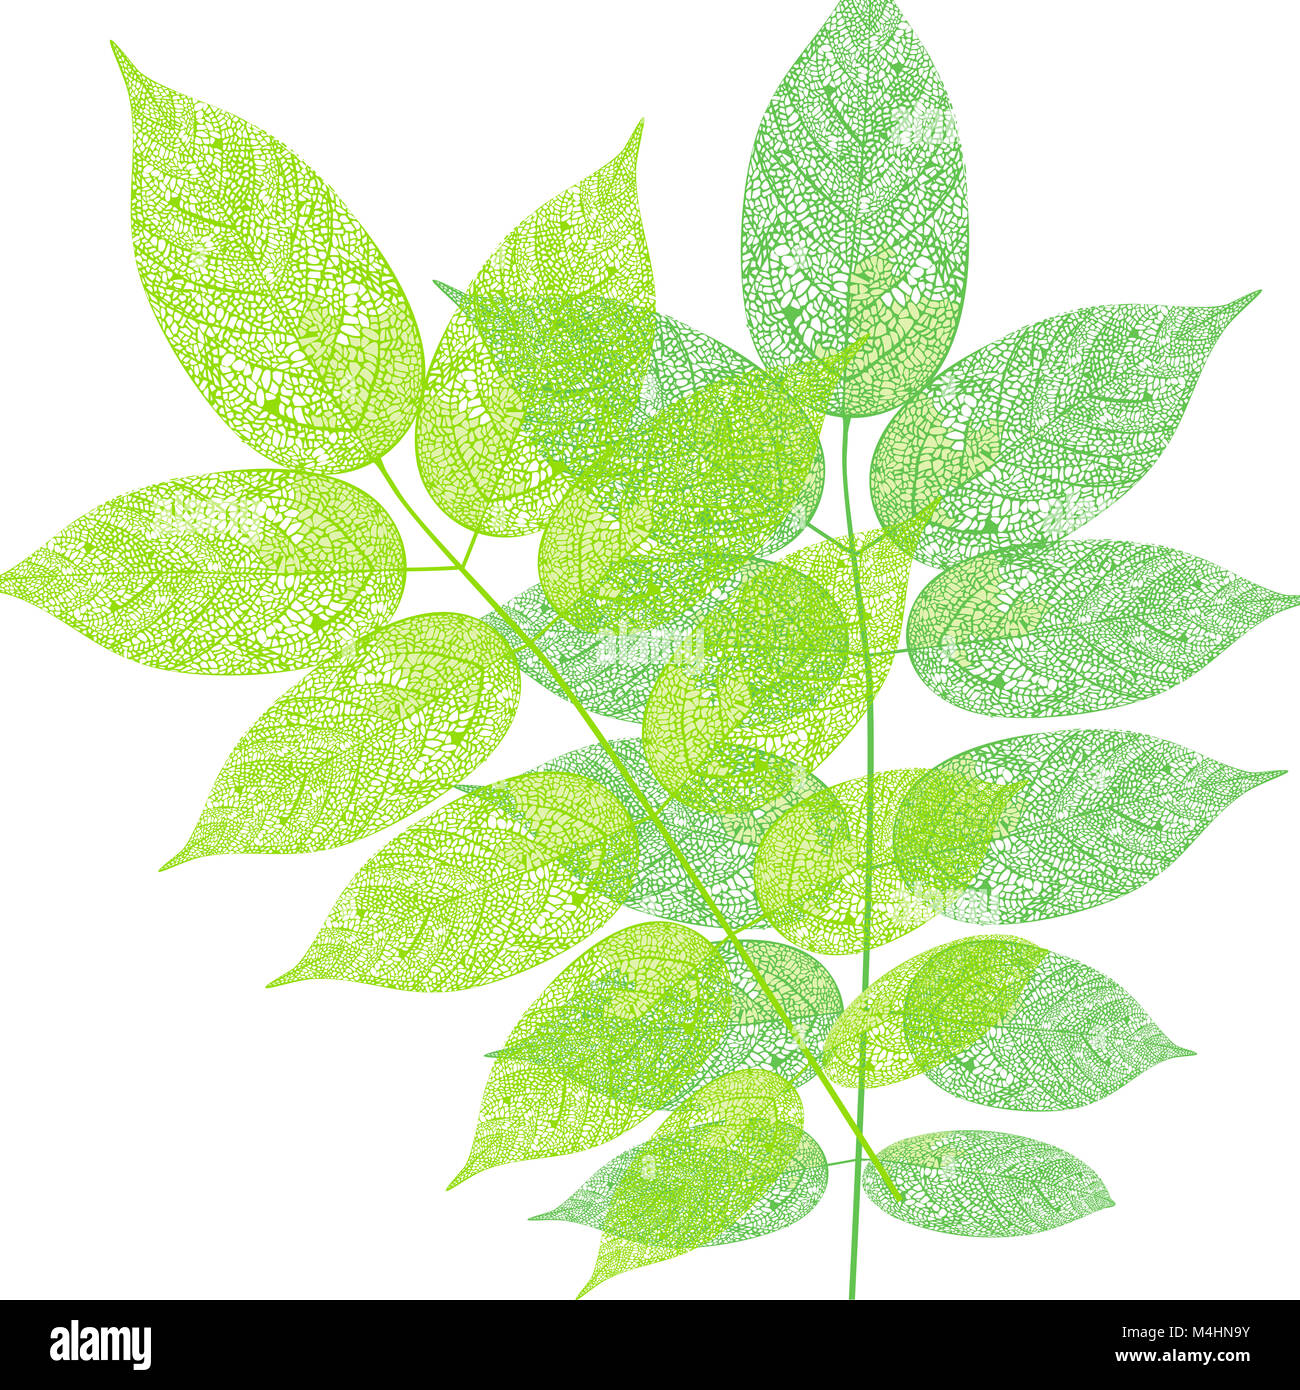 Tree leaves pattern illustration Stock Photo